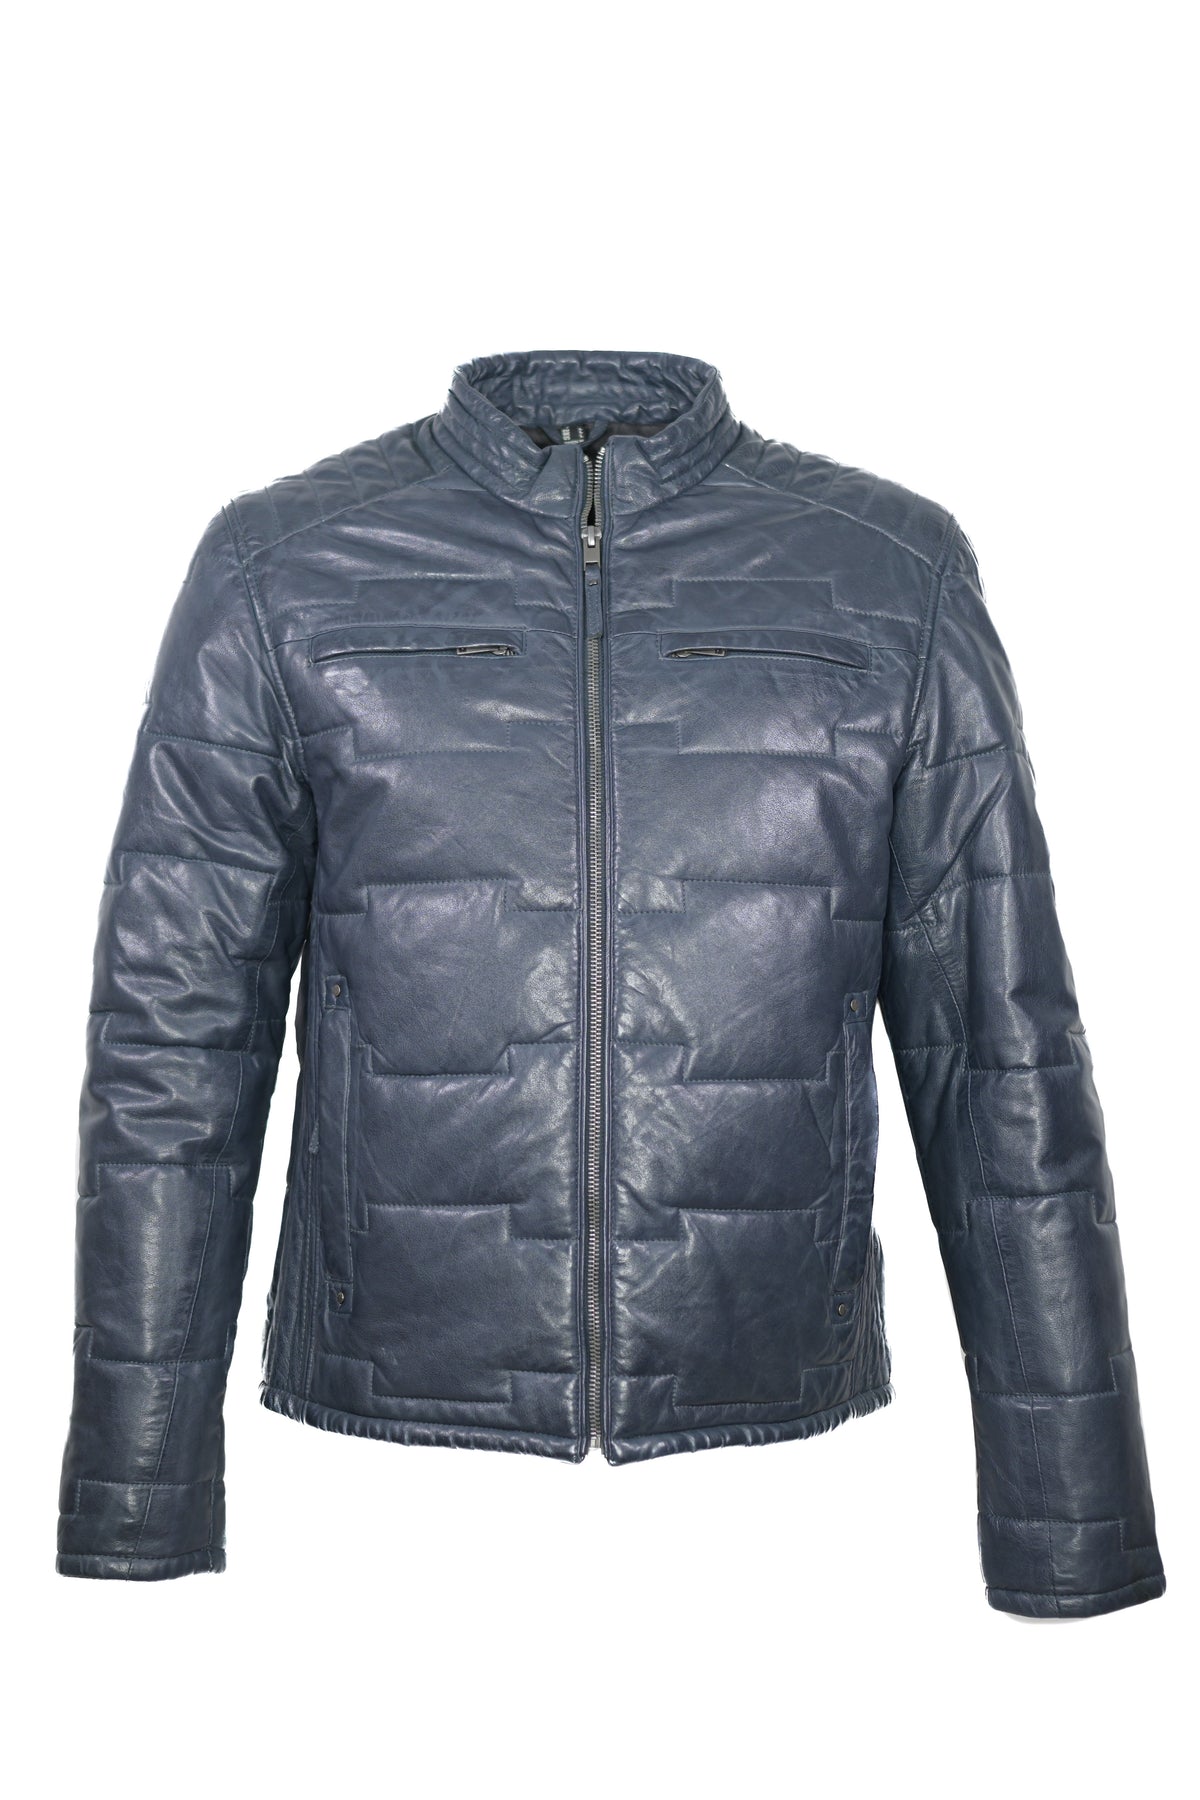 Mauritius Lambskin Leather Jacket